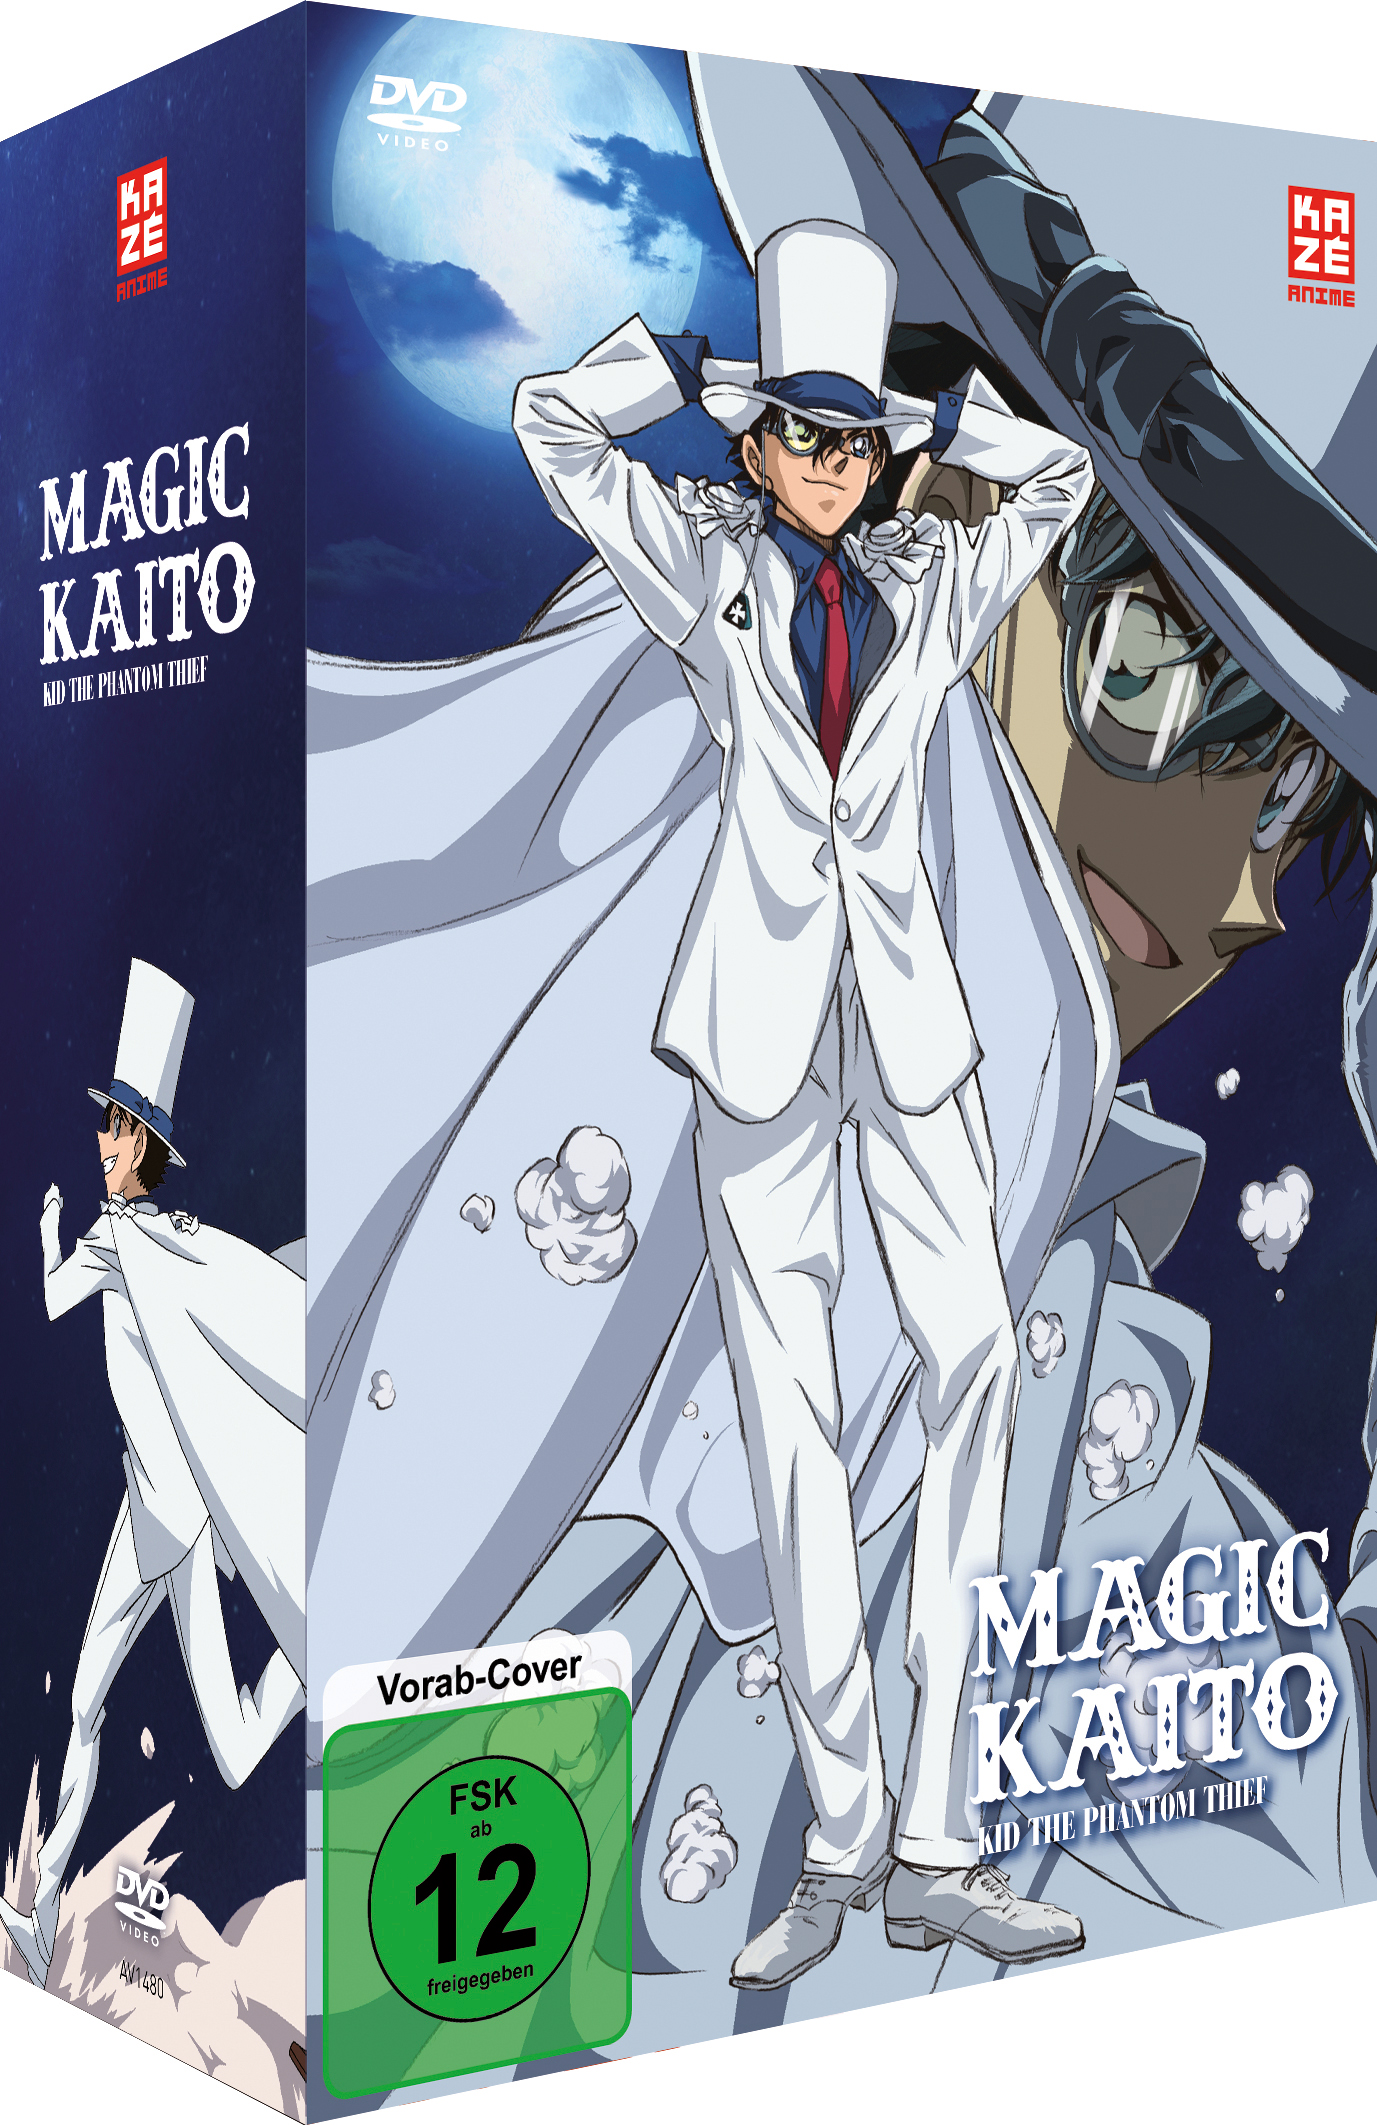 Magic Kaito Kid the Phantom Thief Vol 1 Sammelschuber DVD Vorabcover